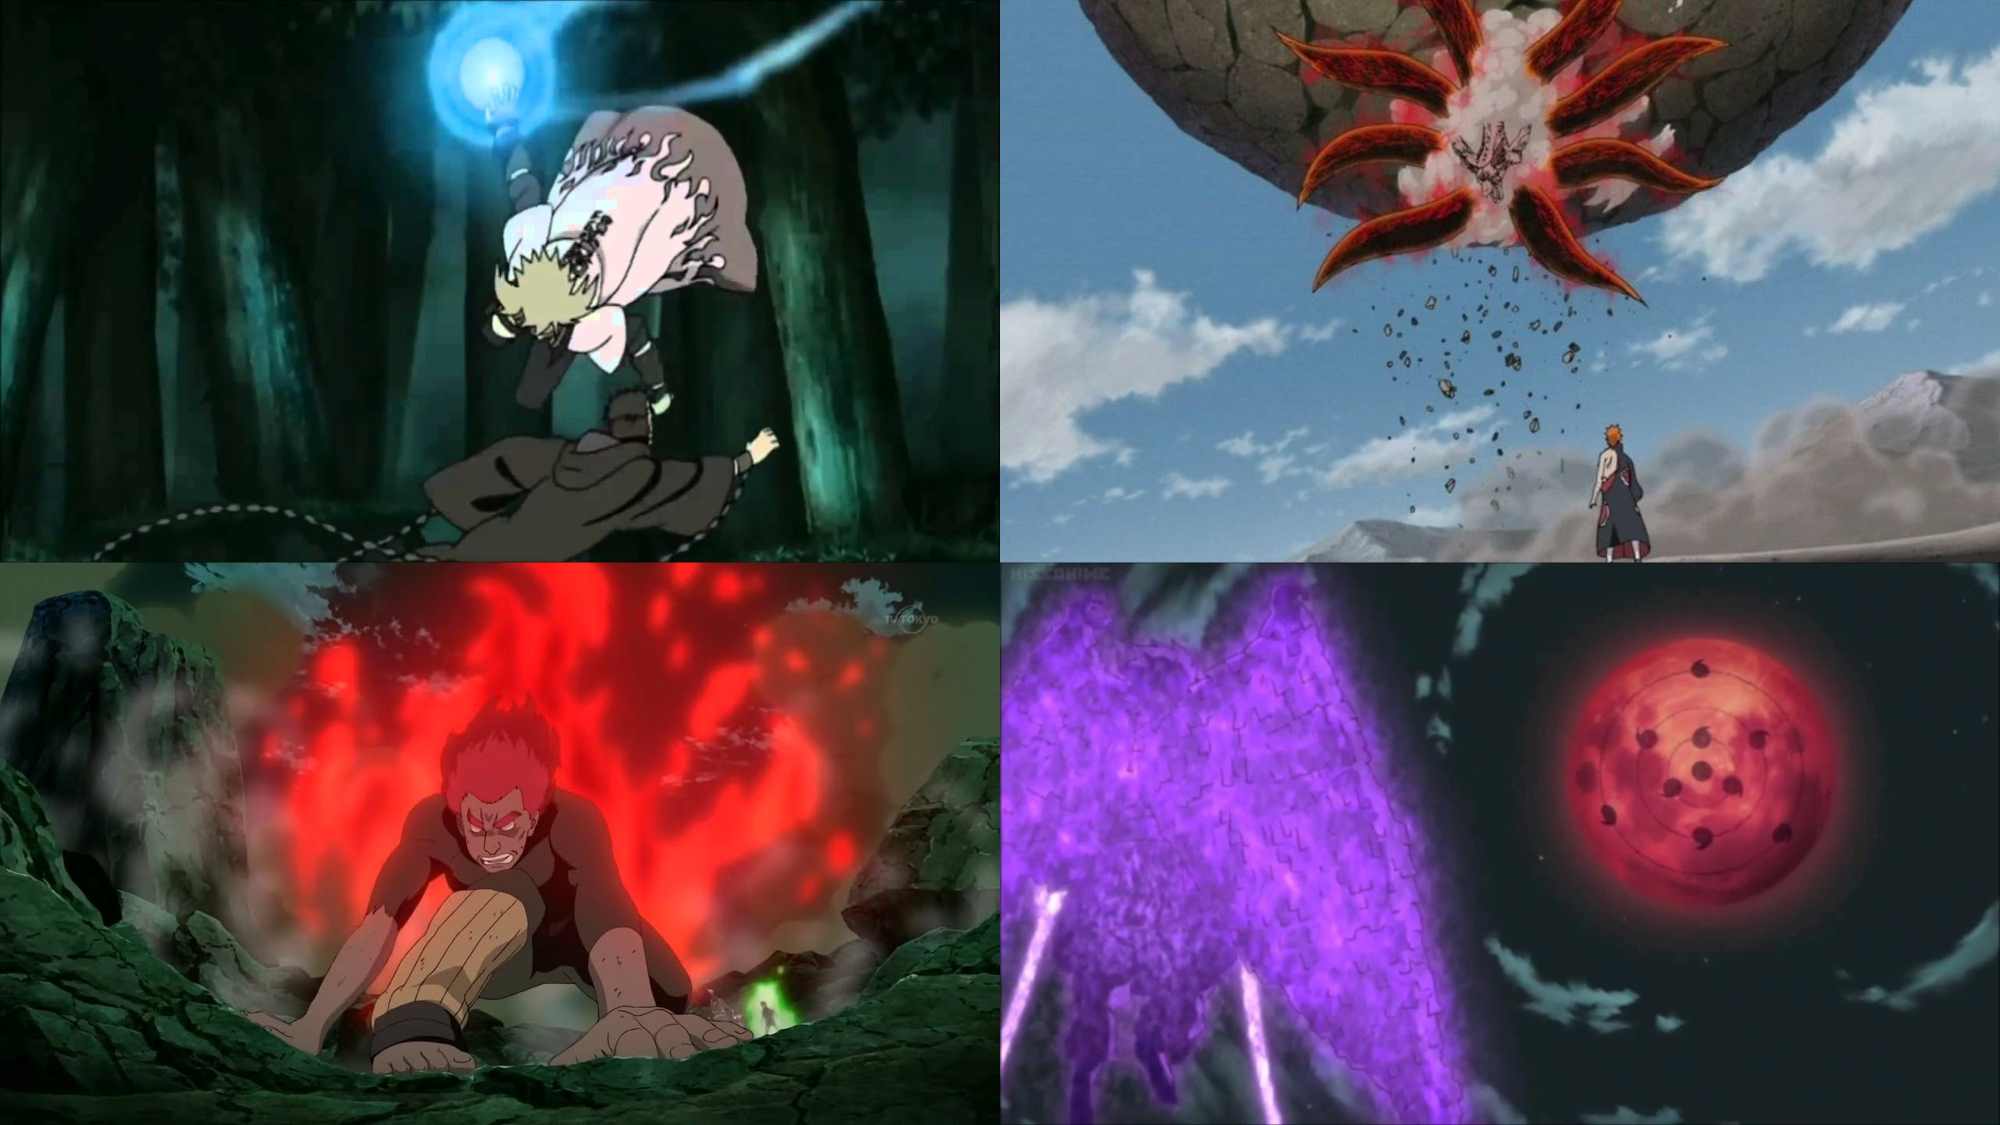 Most powerful jutsu in the Naruto Anime & Manga